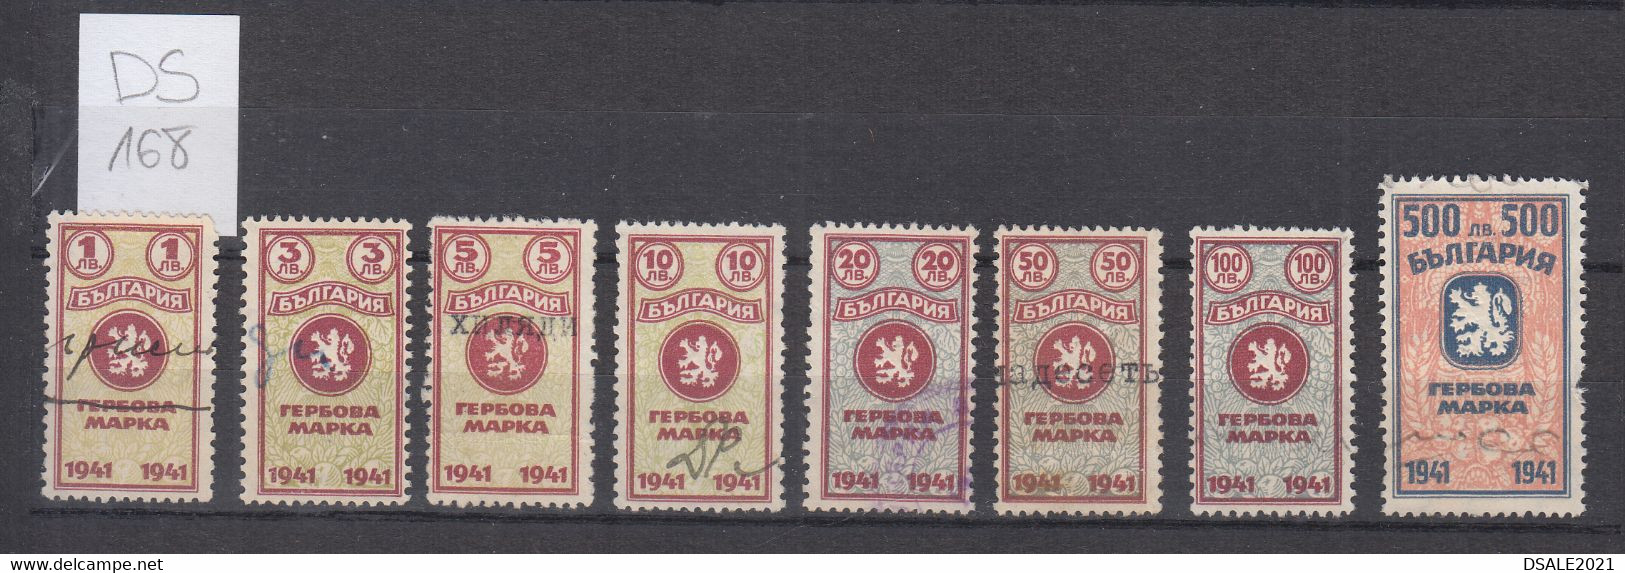 Bulgaria Bulgarie Bulgarije 1945 Bulgarian Fiscal Revenue Revenues Stamp Stamps (ds168) - Timbres De Service